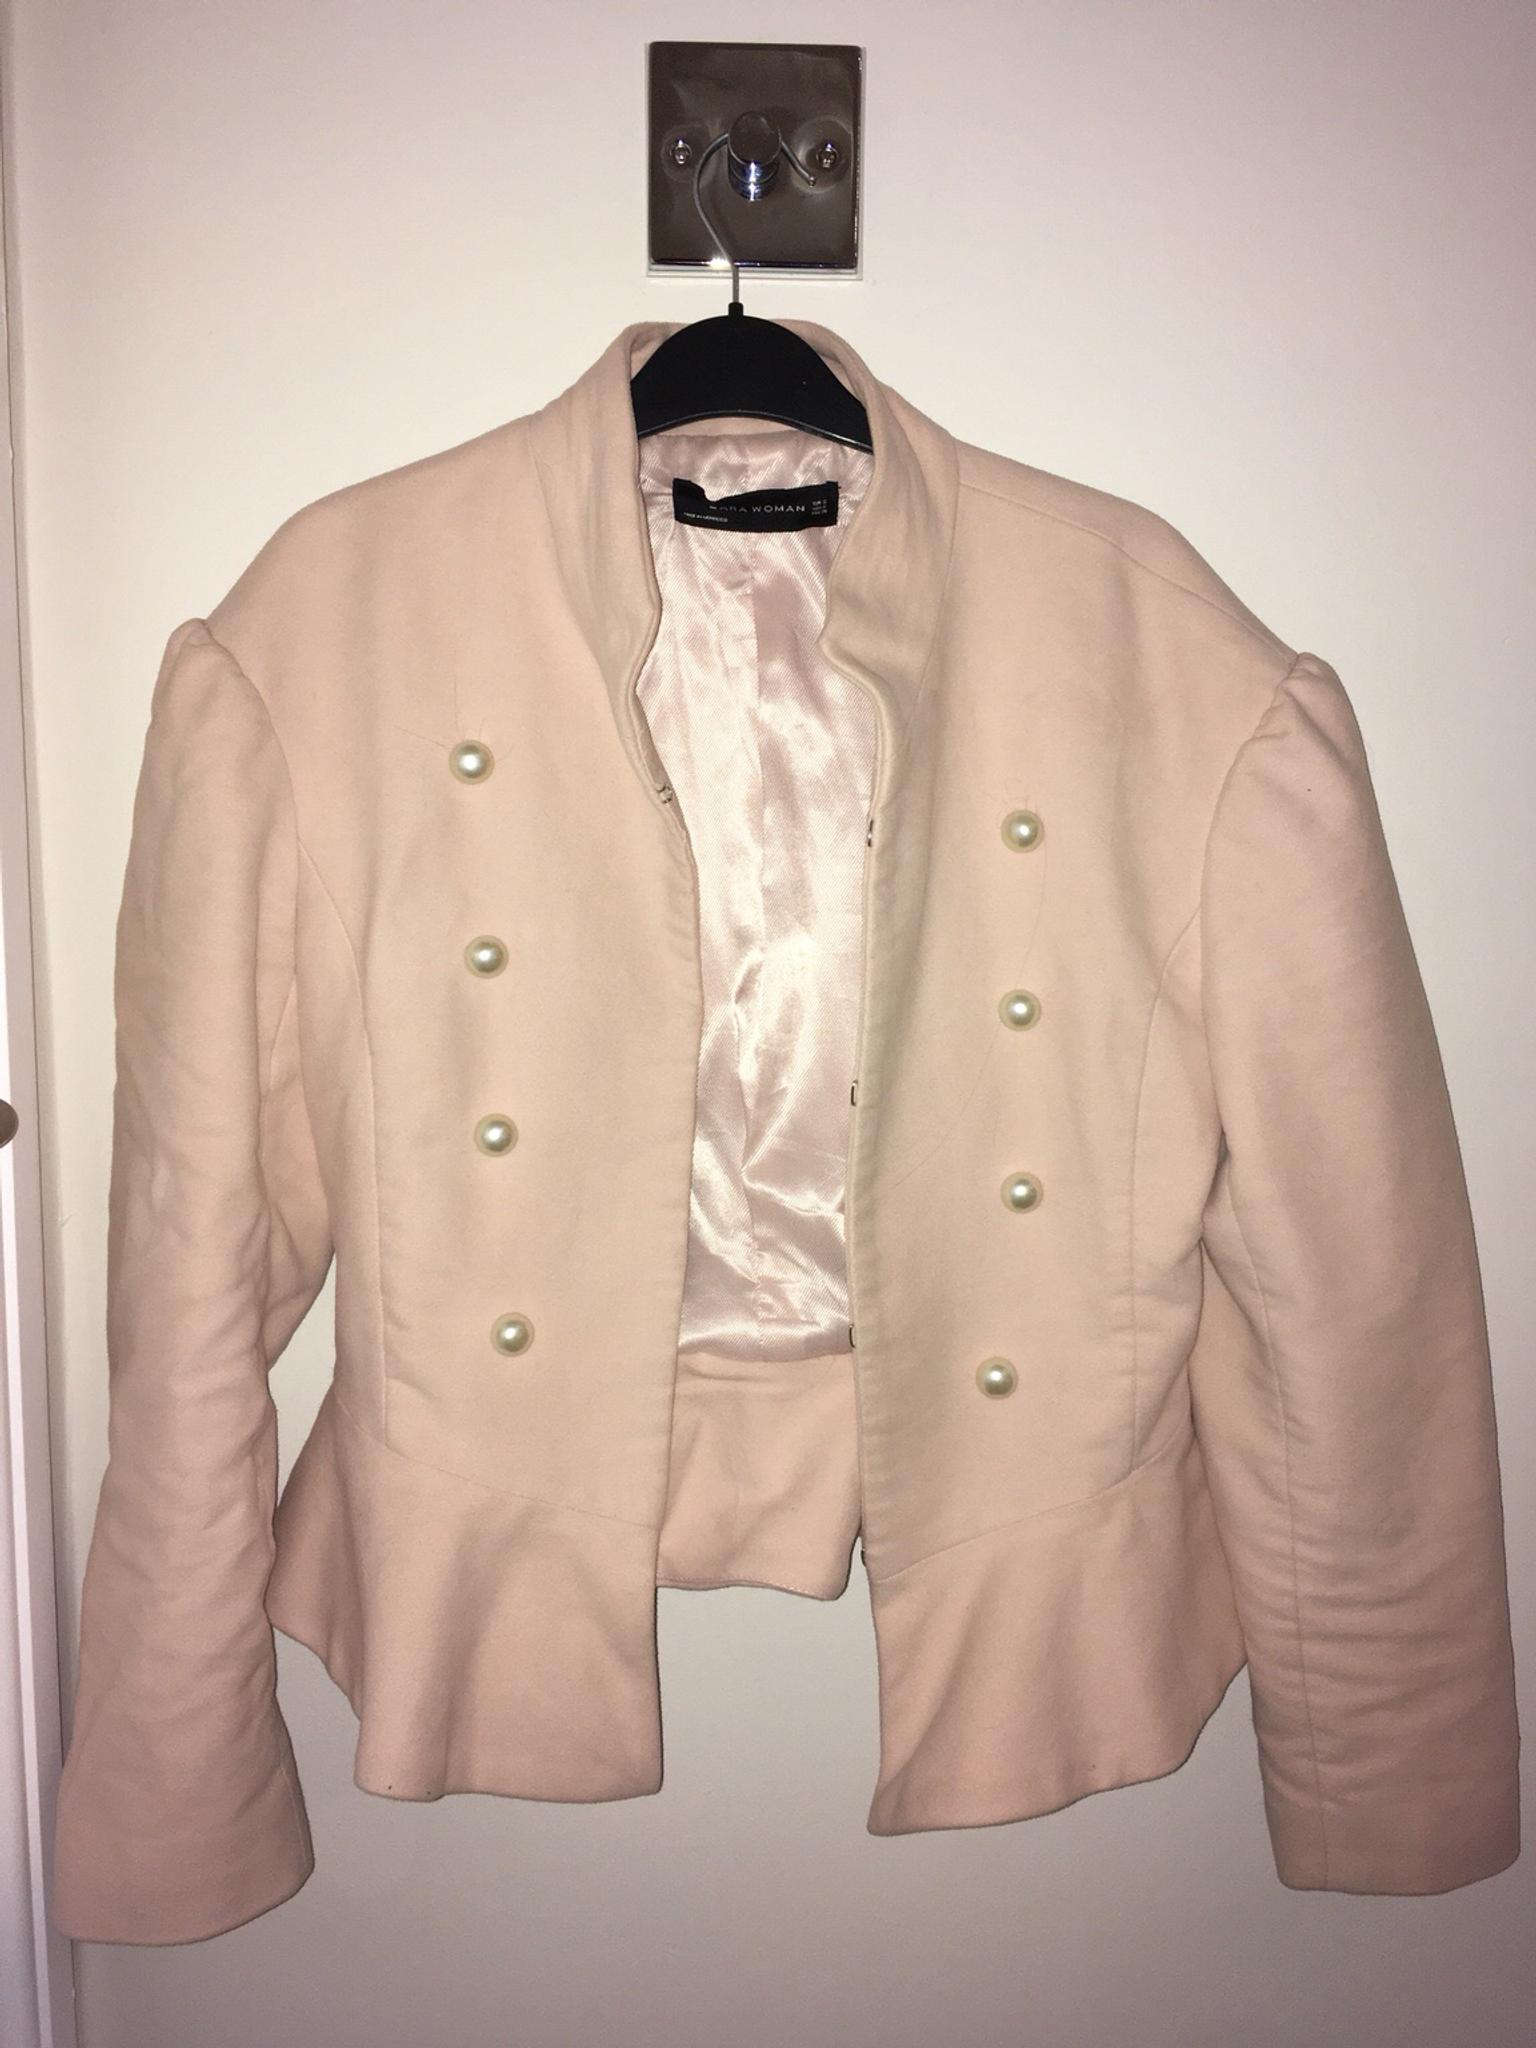 zara basic pink jacket